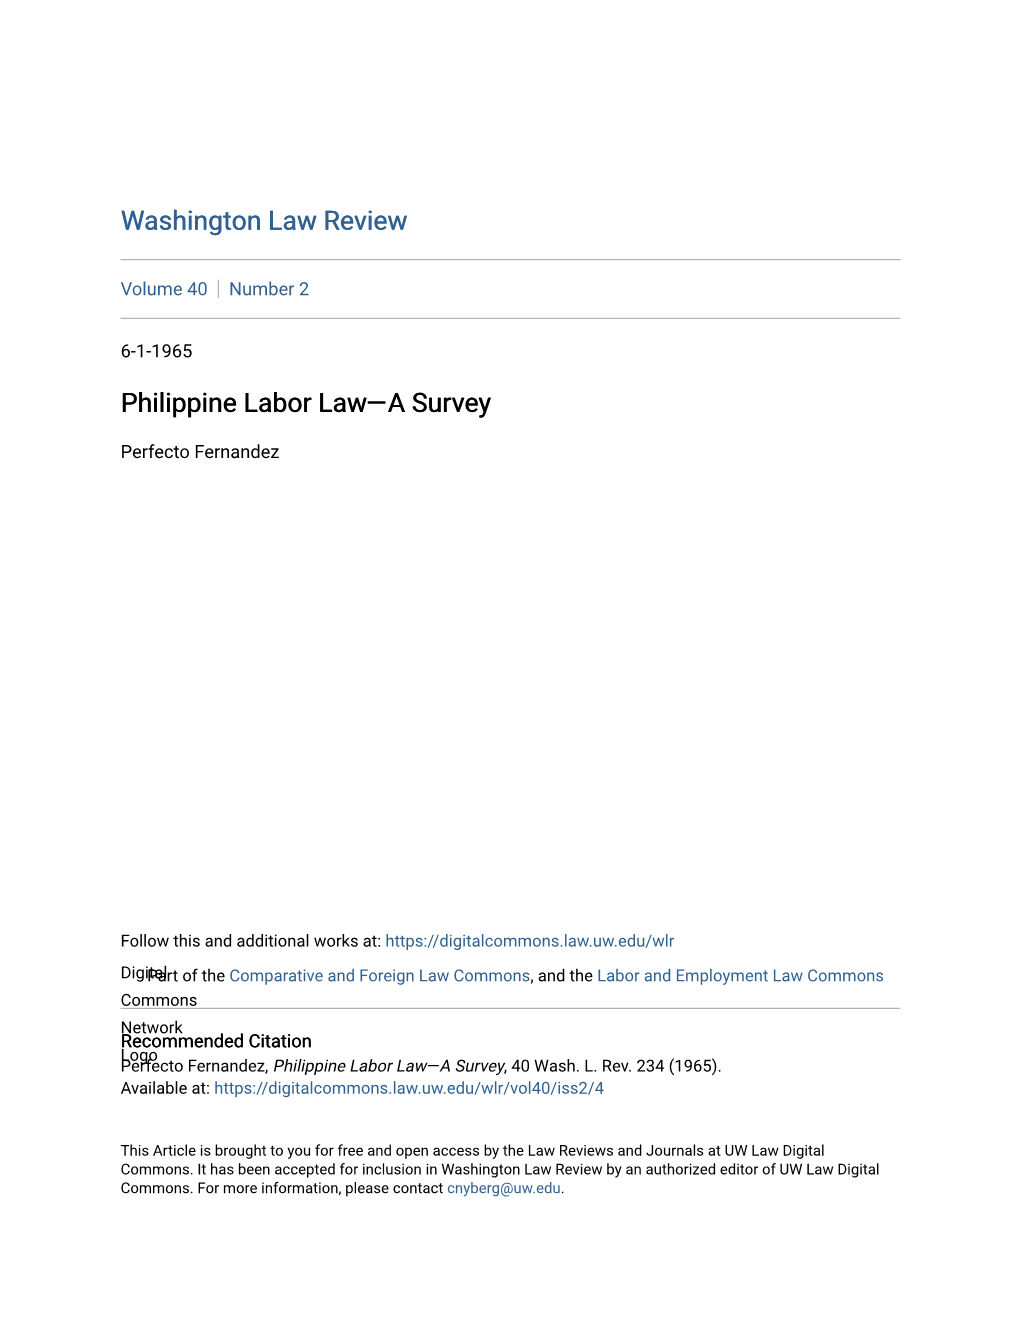 Philippine Labor Lawâ•Fla Survey